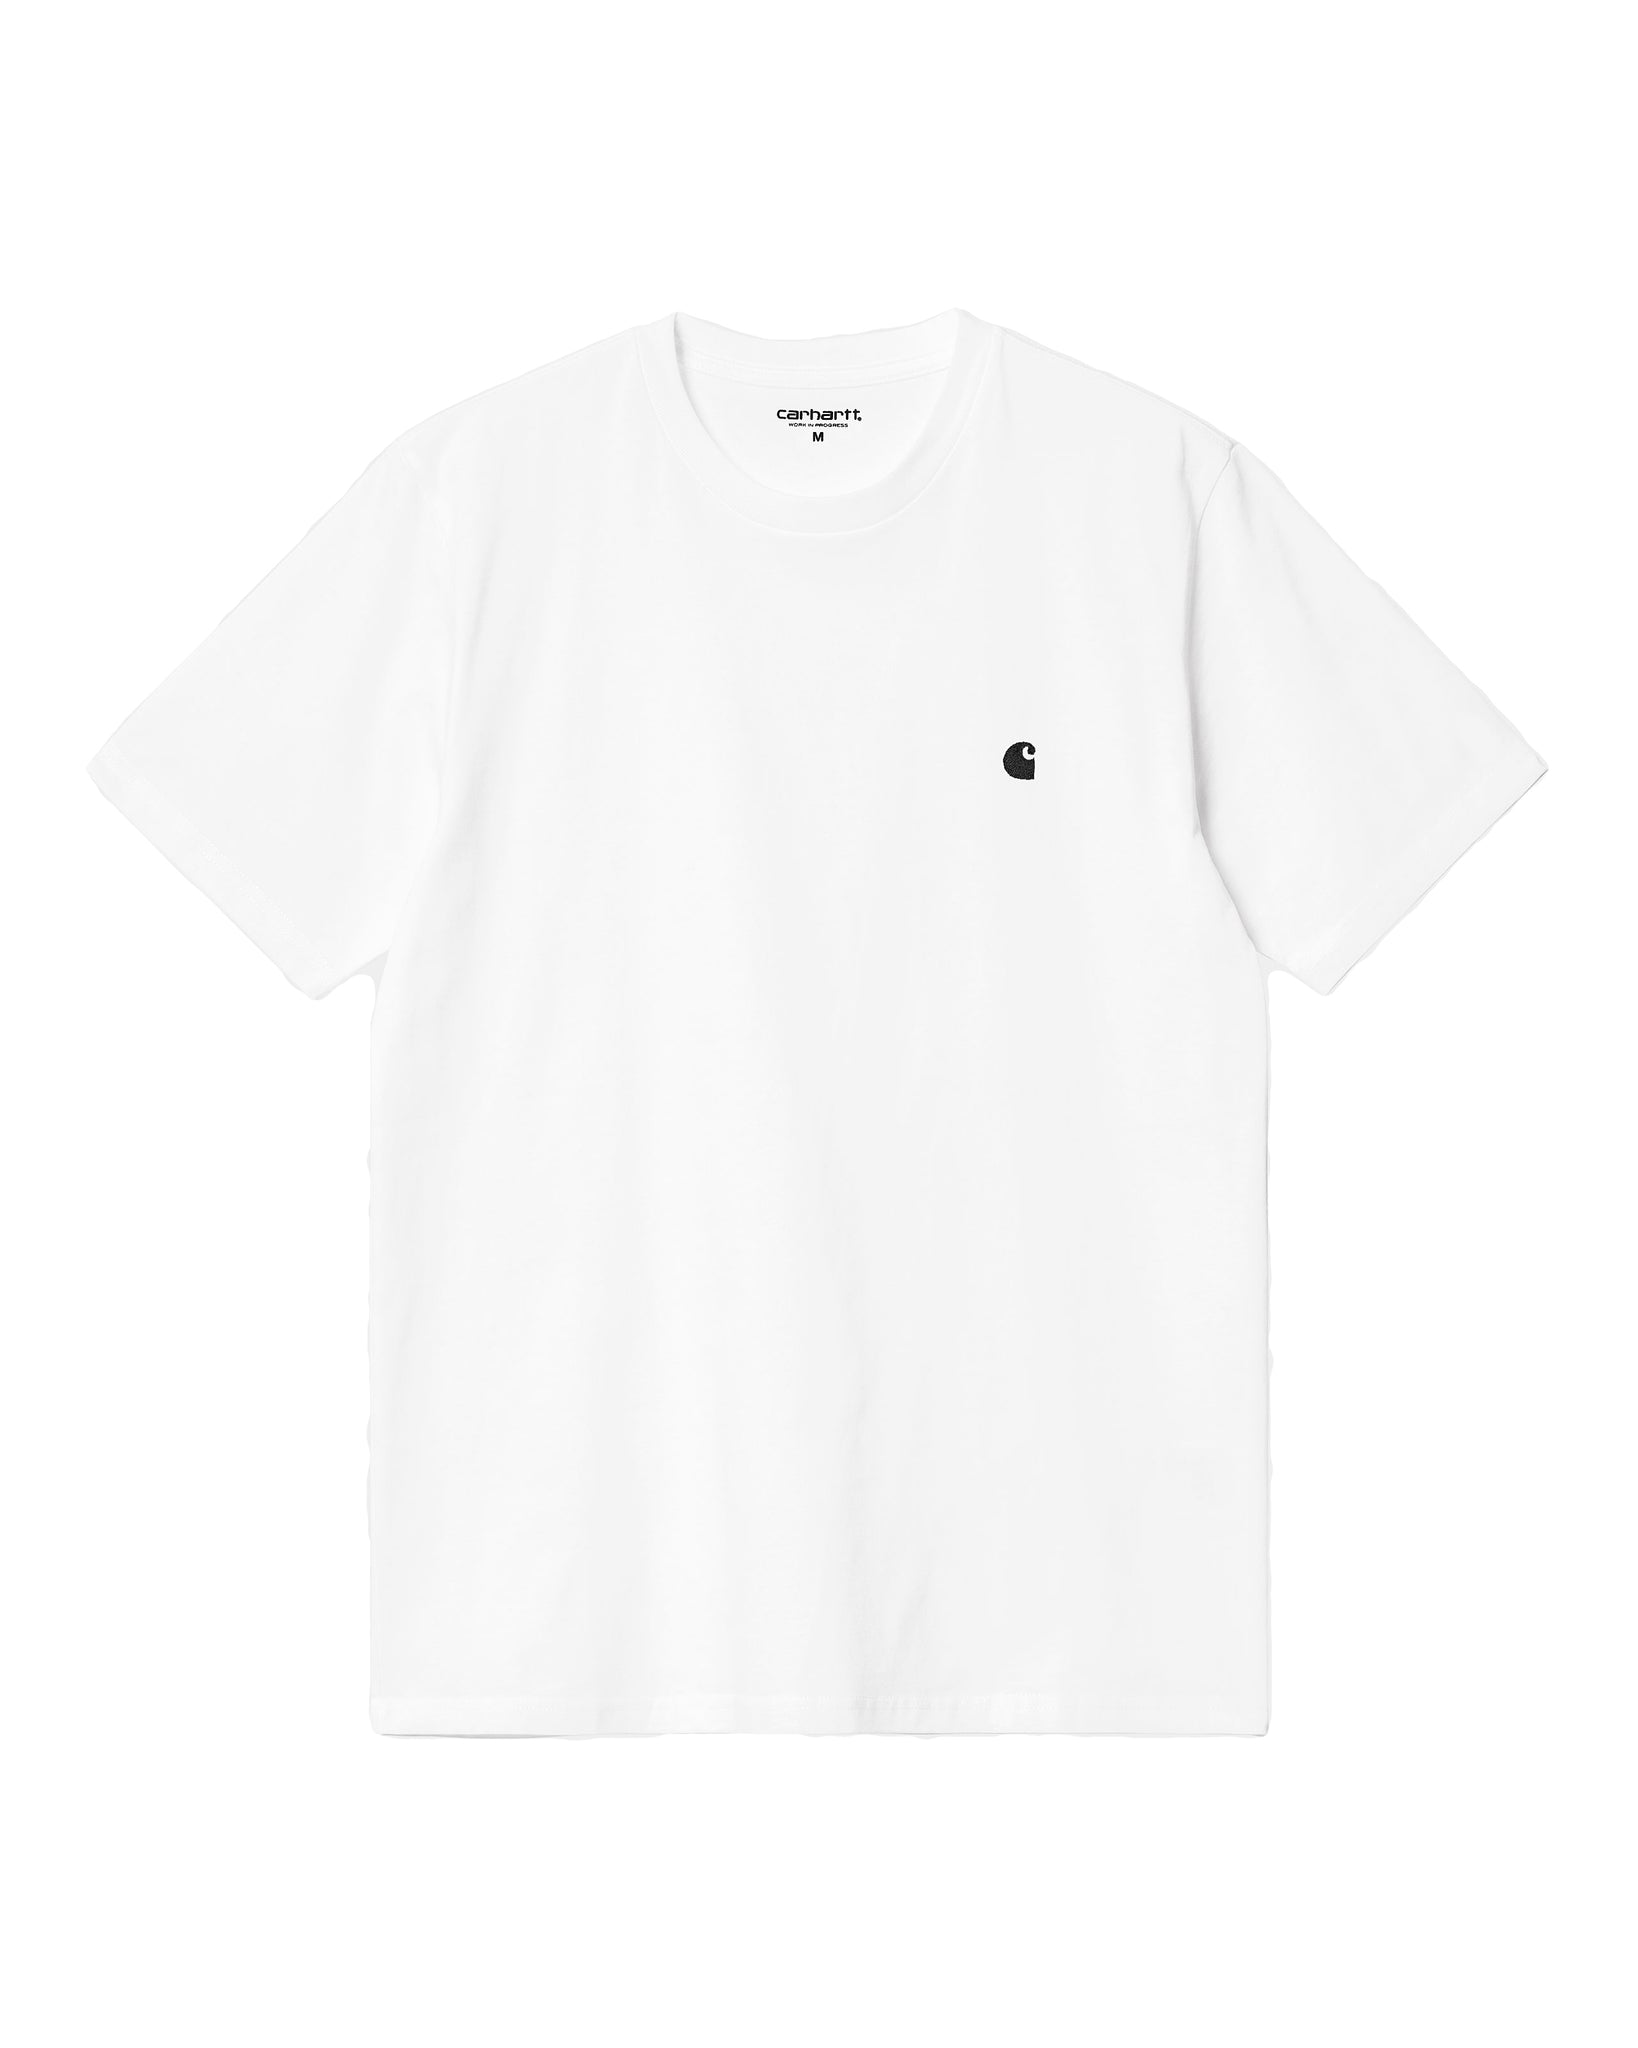 Camiseta SS Madison - White/Black